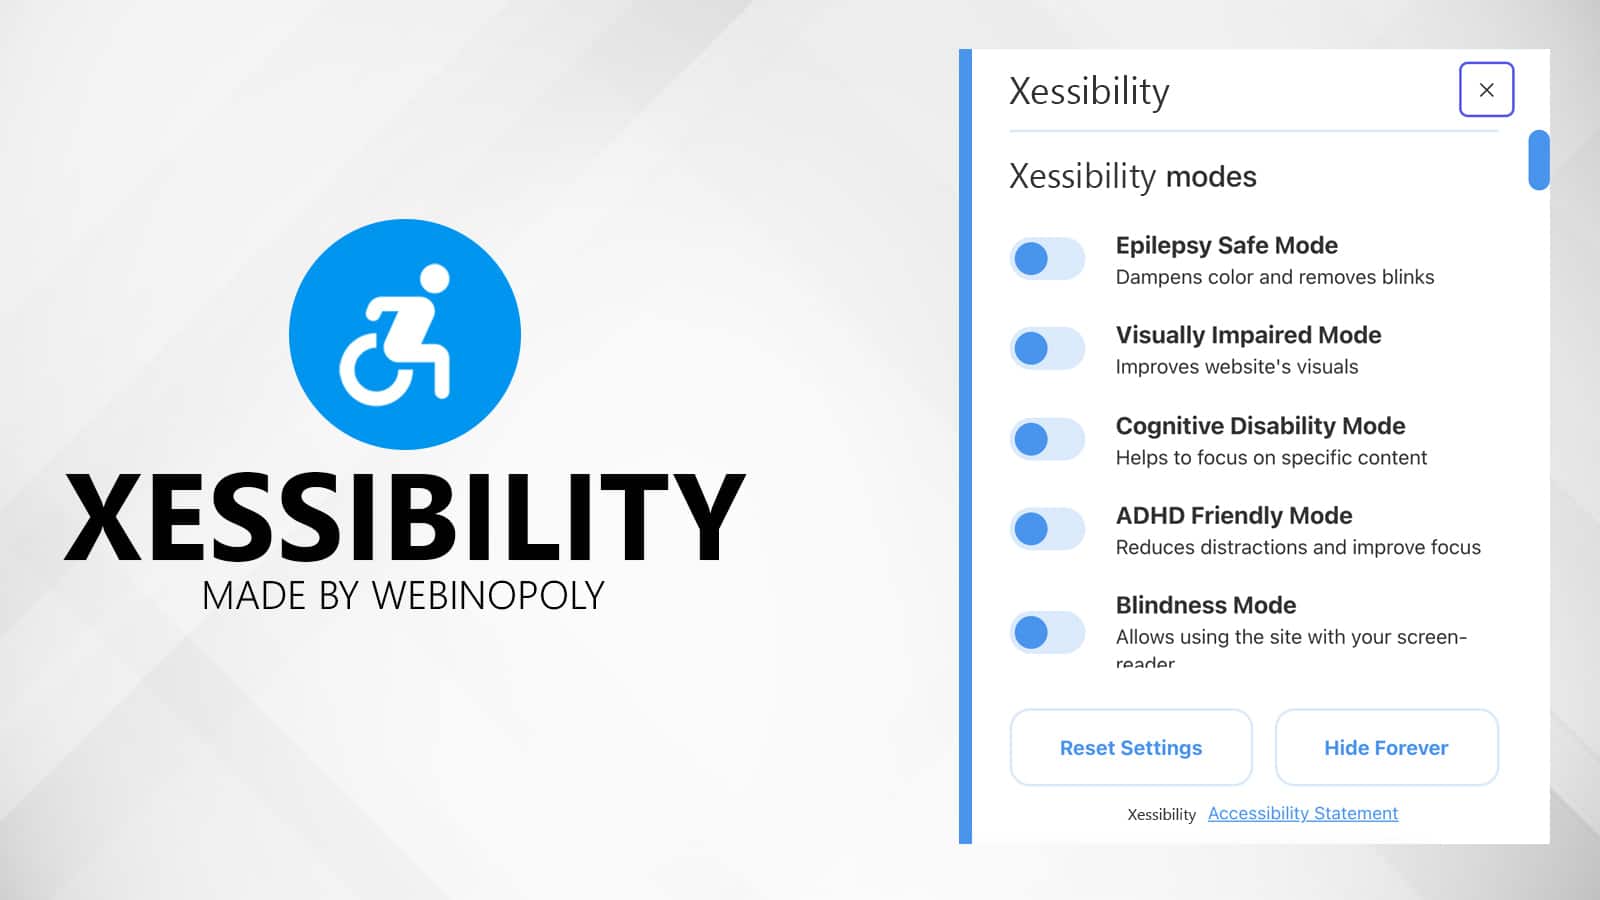 Xessibility by Webinopoly